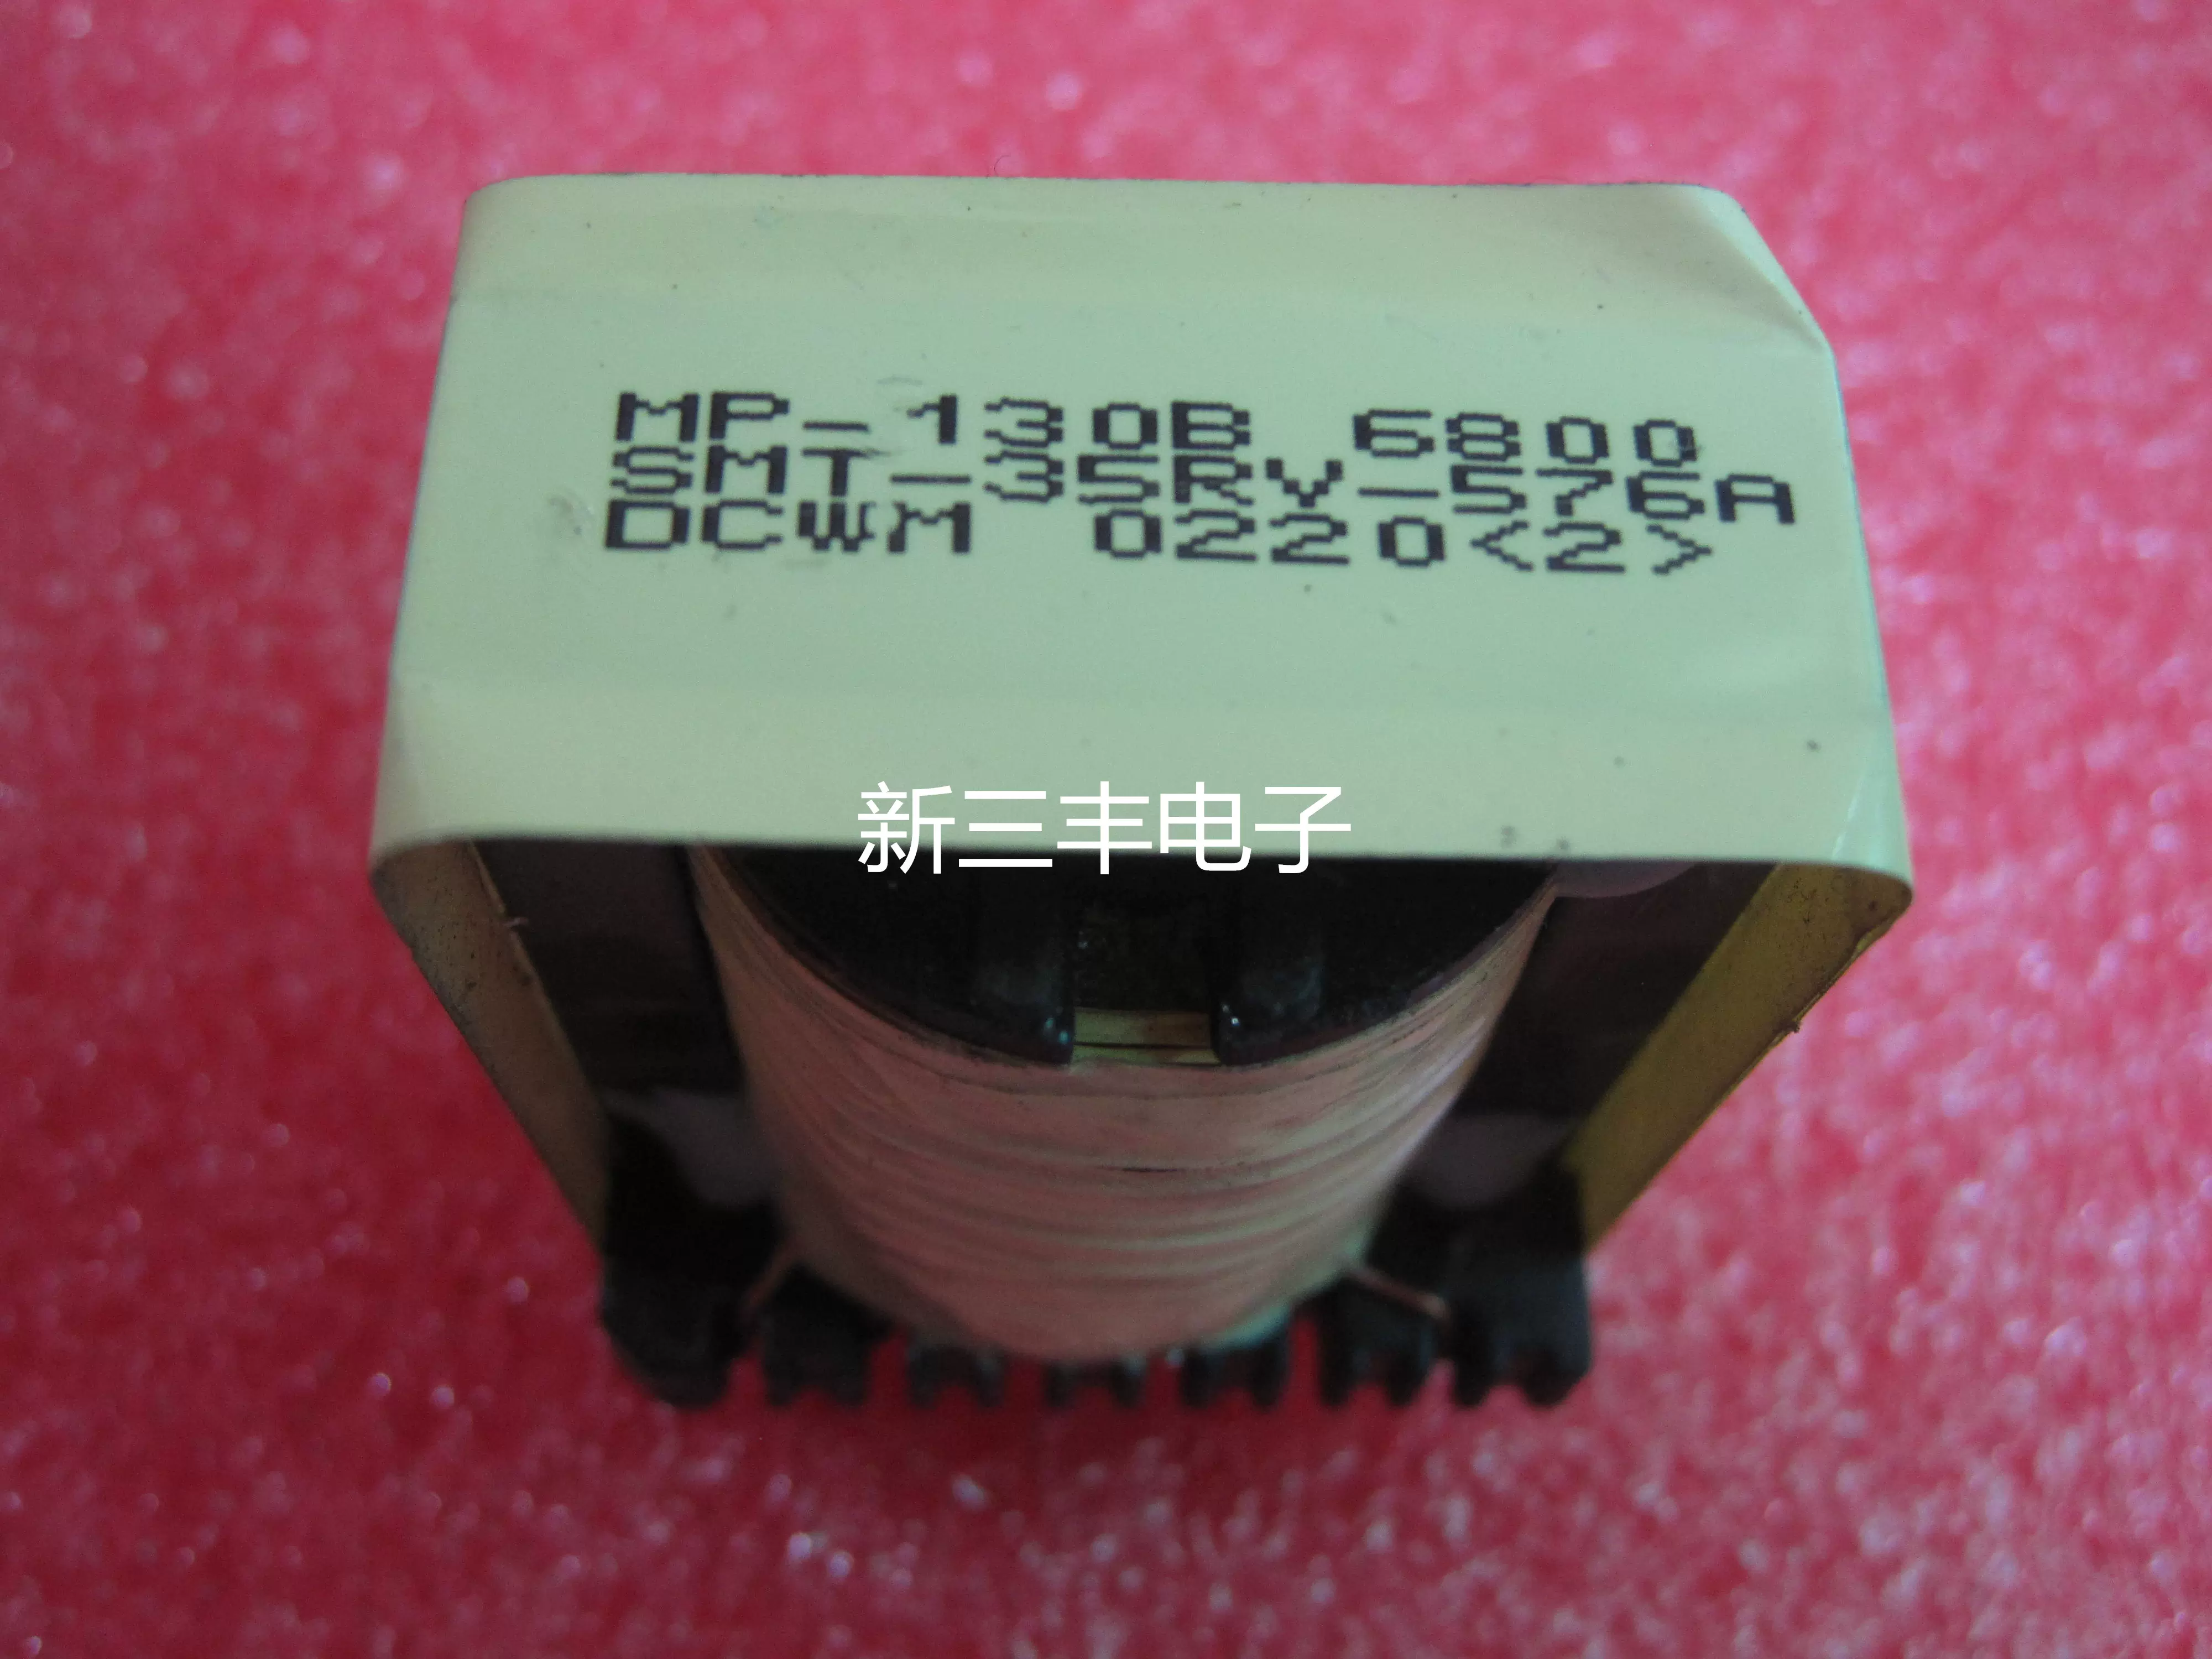 MP-130B 6800 SMT-35RV-576A 进口正品保证质量